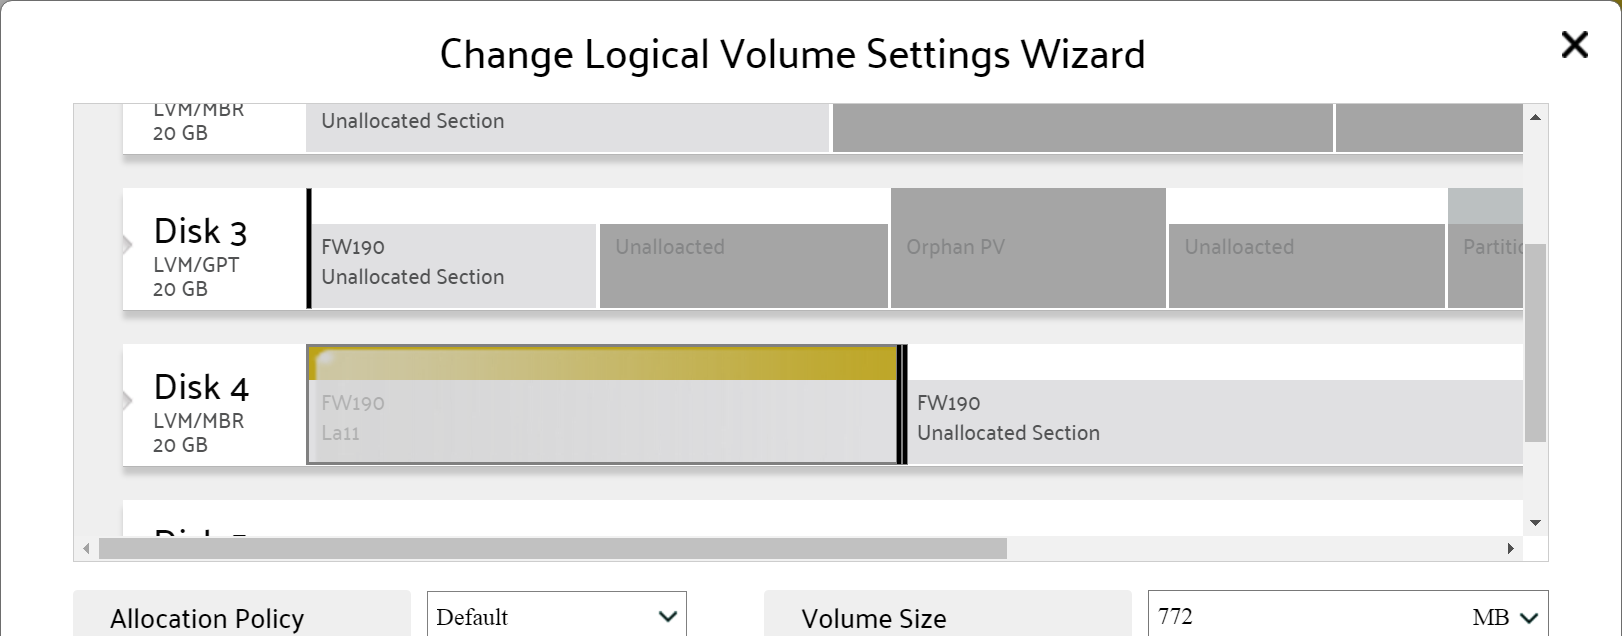 Change logical volume settings